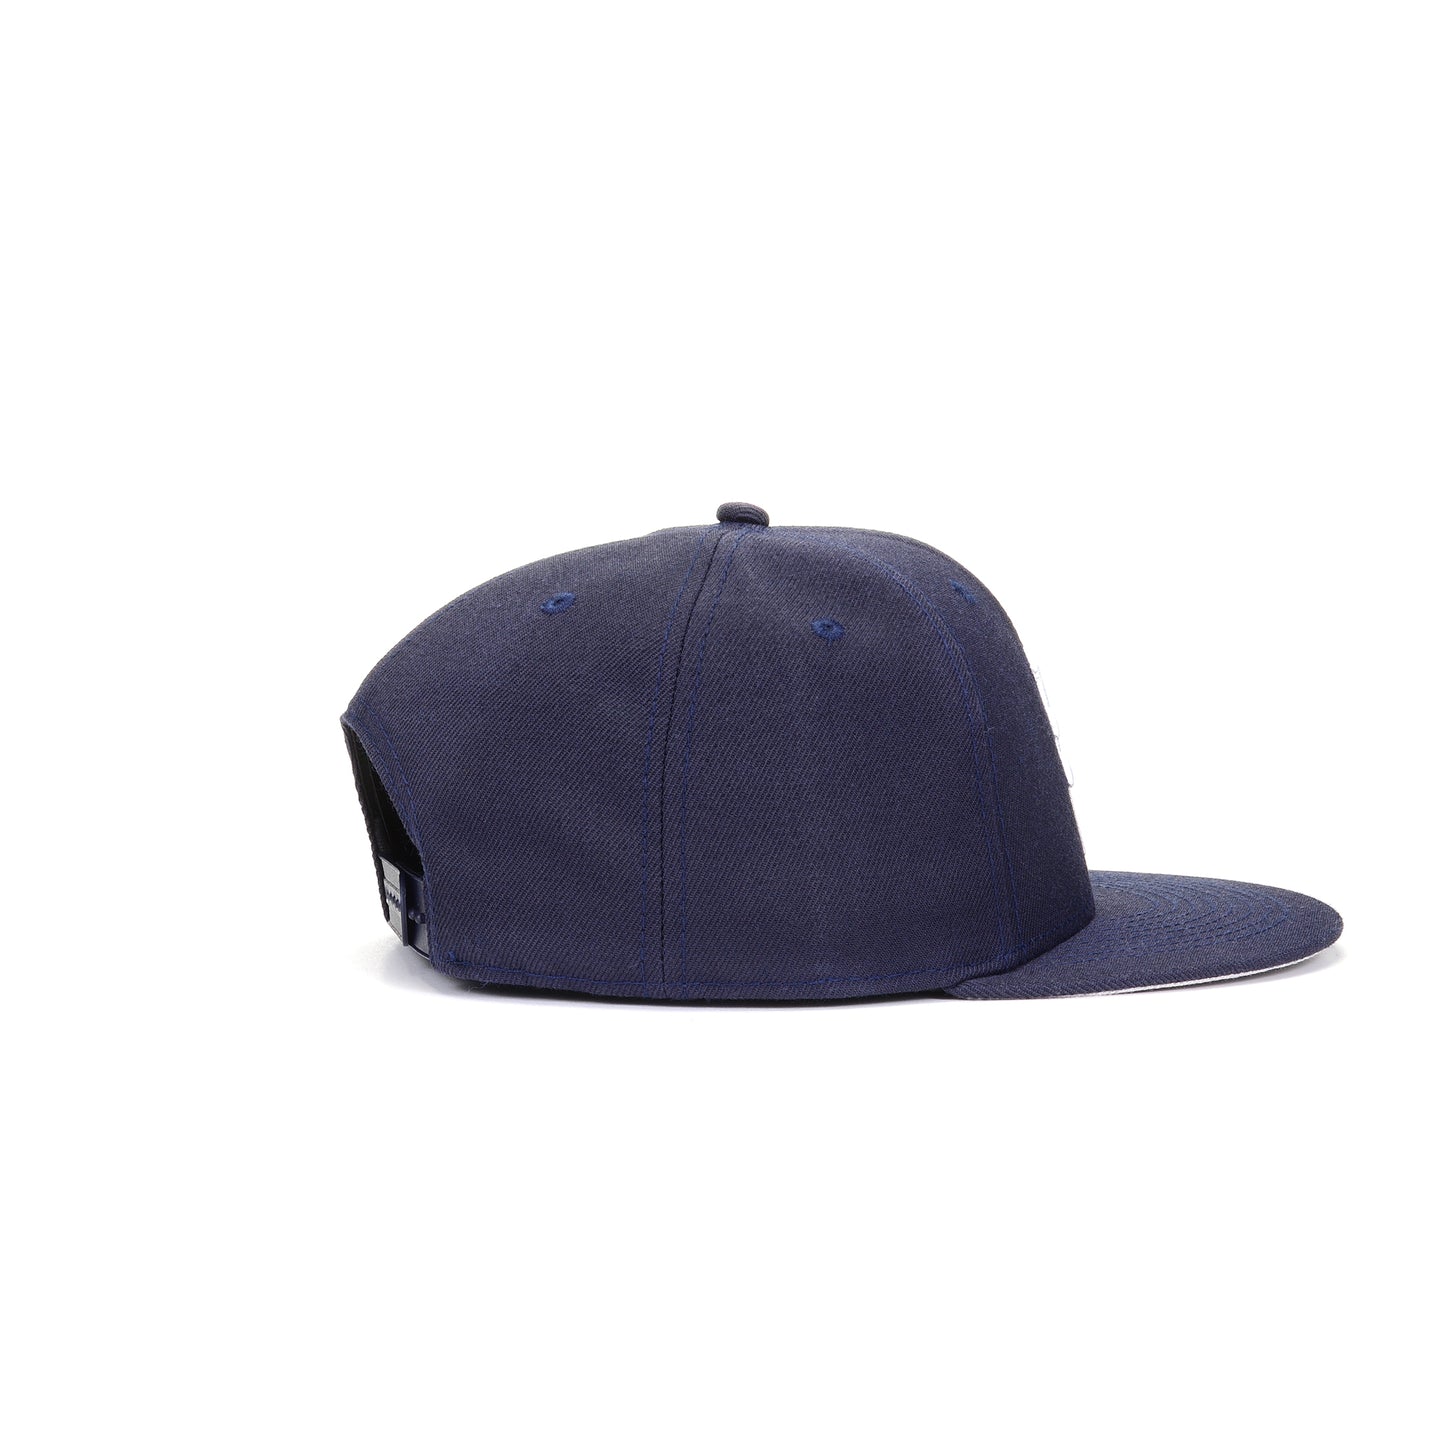 Baseball hat 360 photography | Interactive eCommerce photography of fashion product